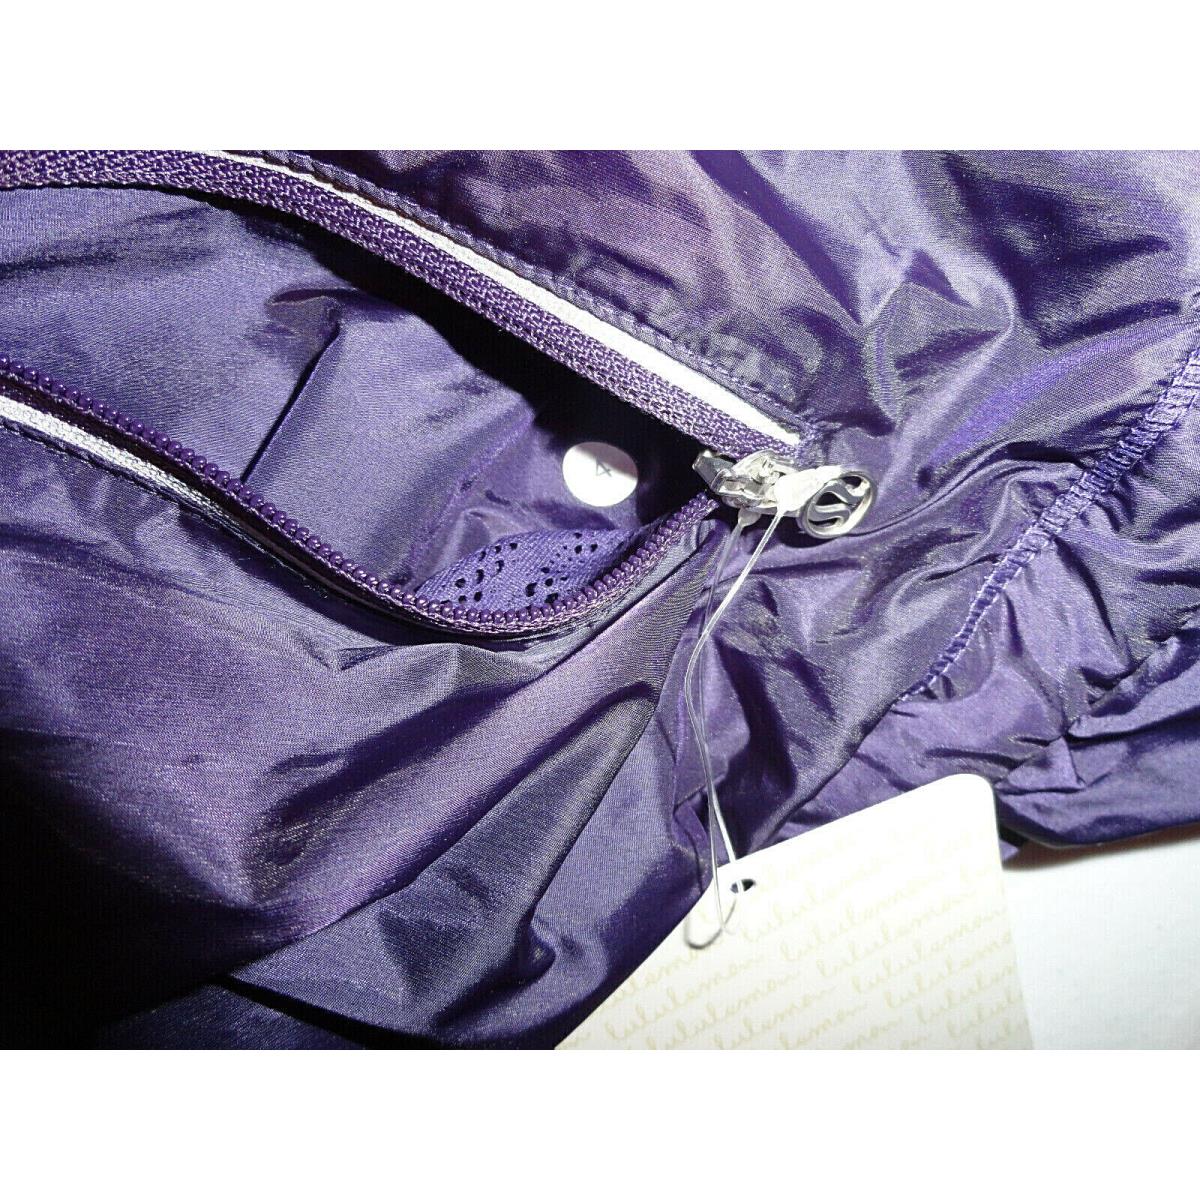 Lululemon clothing RUN - Purple 6